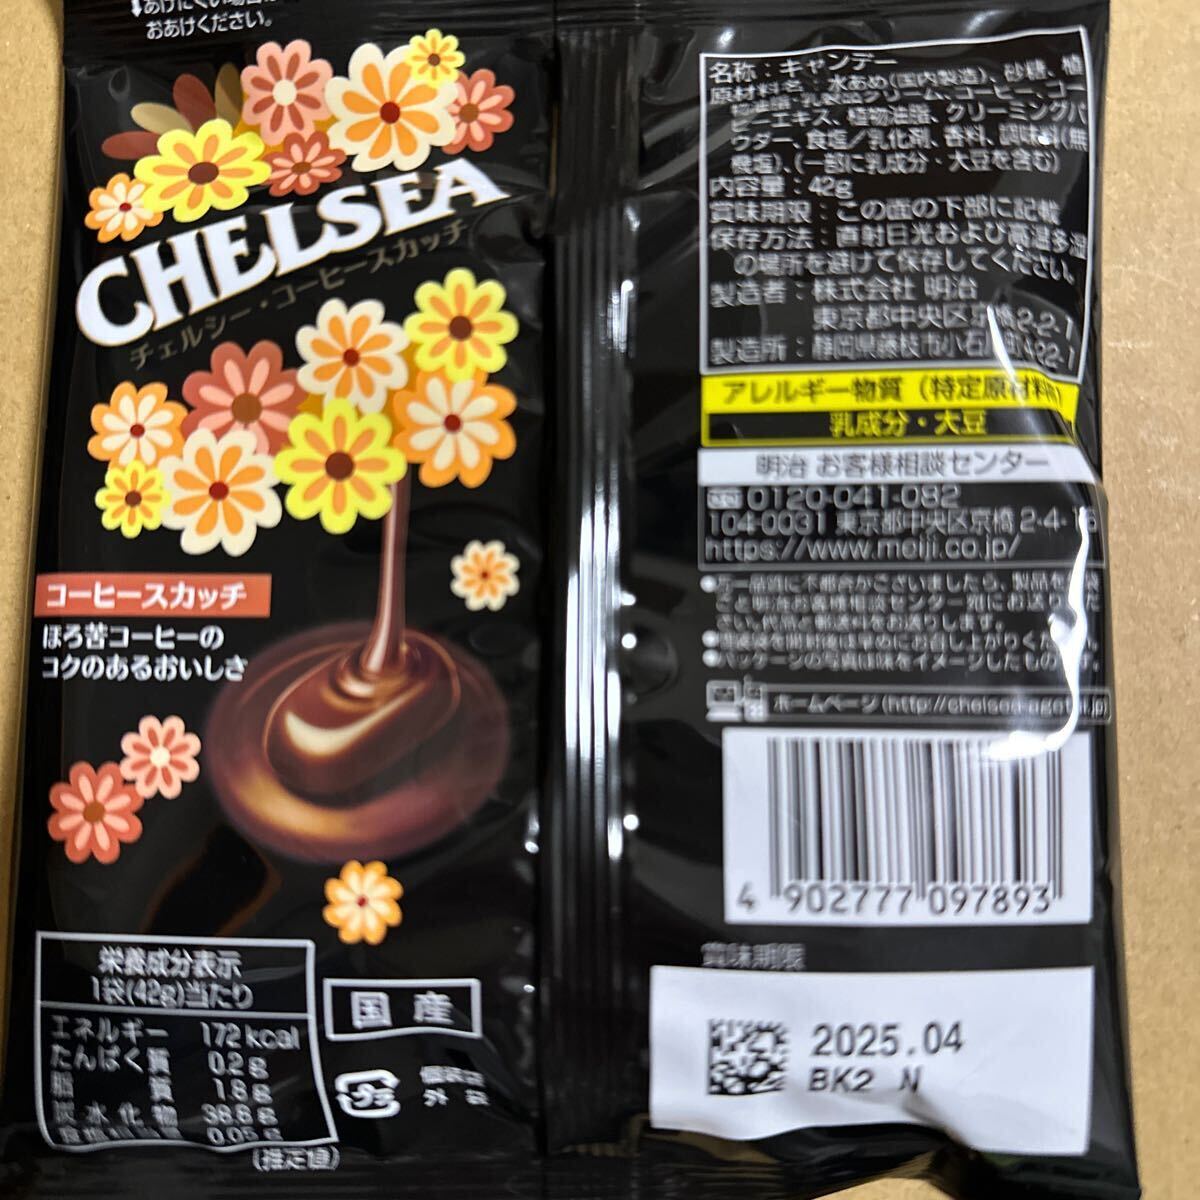  Chelsea yoghurt ska chi butter ska chi coffee ska chi3 sack set Meiji Chelsea sweets CHELSEA